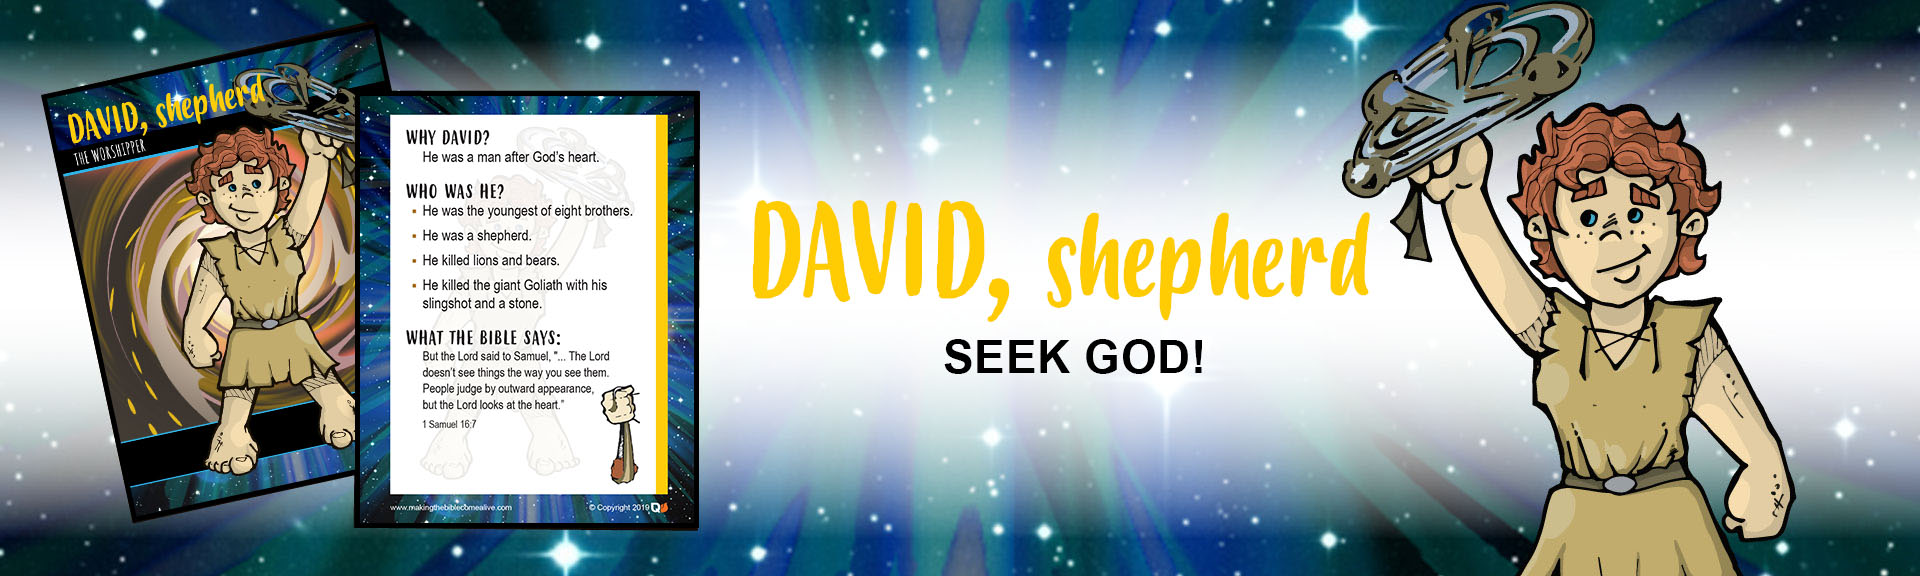 David shepherd | Making the Bible Come Alive